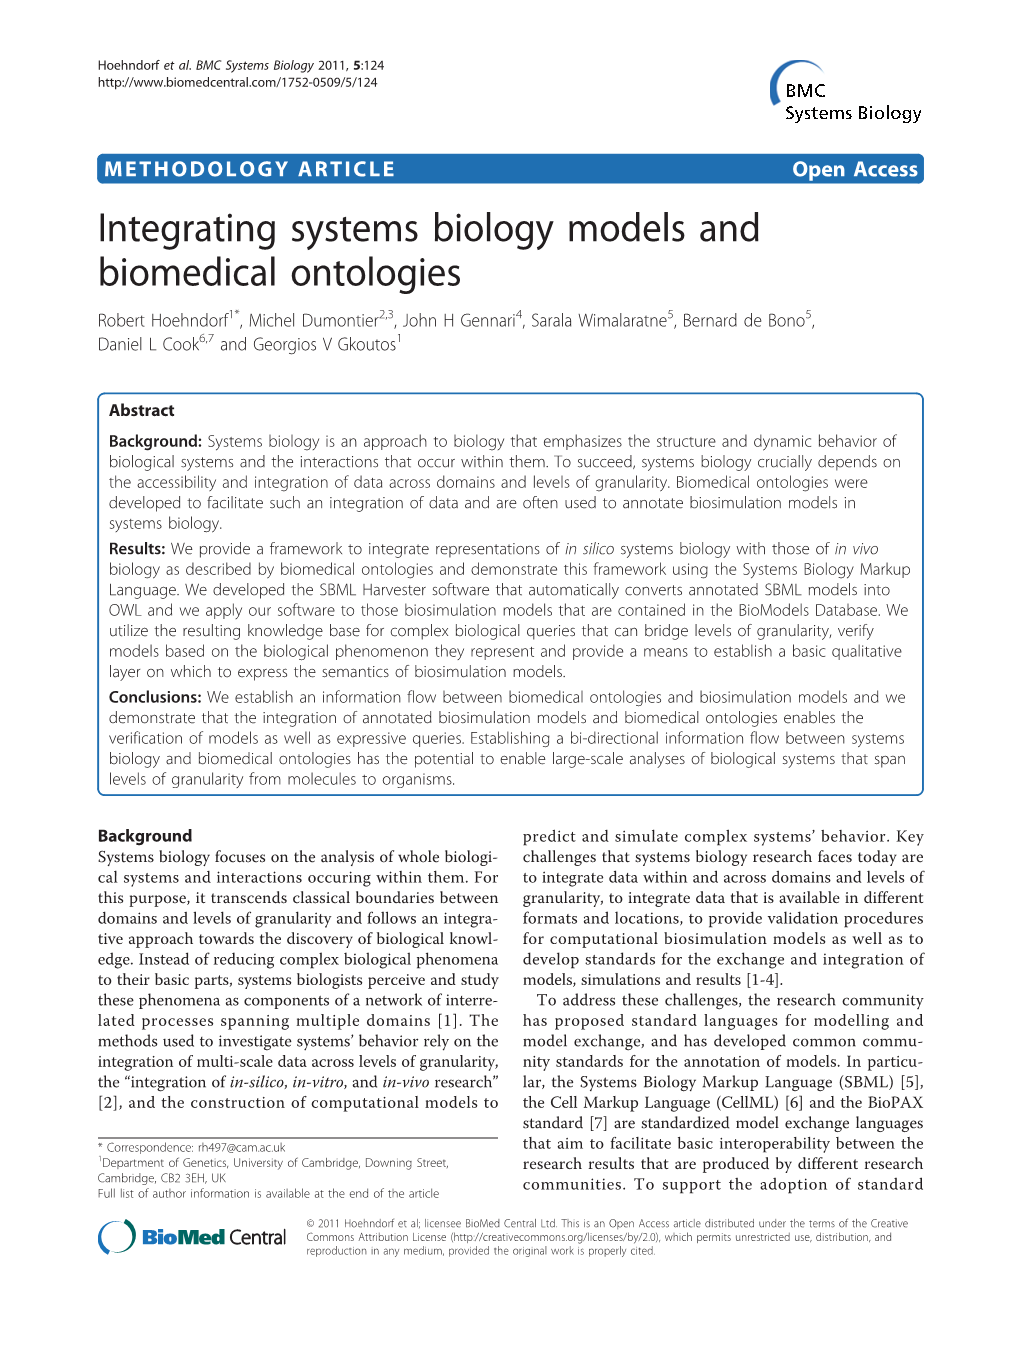 Integrating Systems Biology Models and Biomedical Ontologies